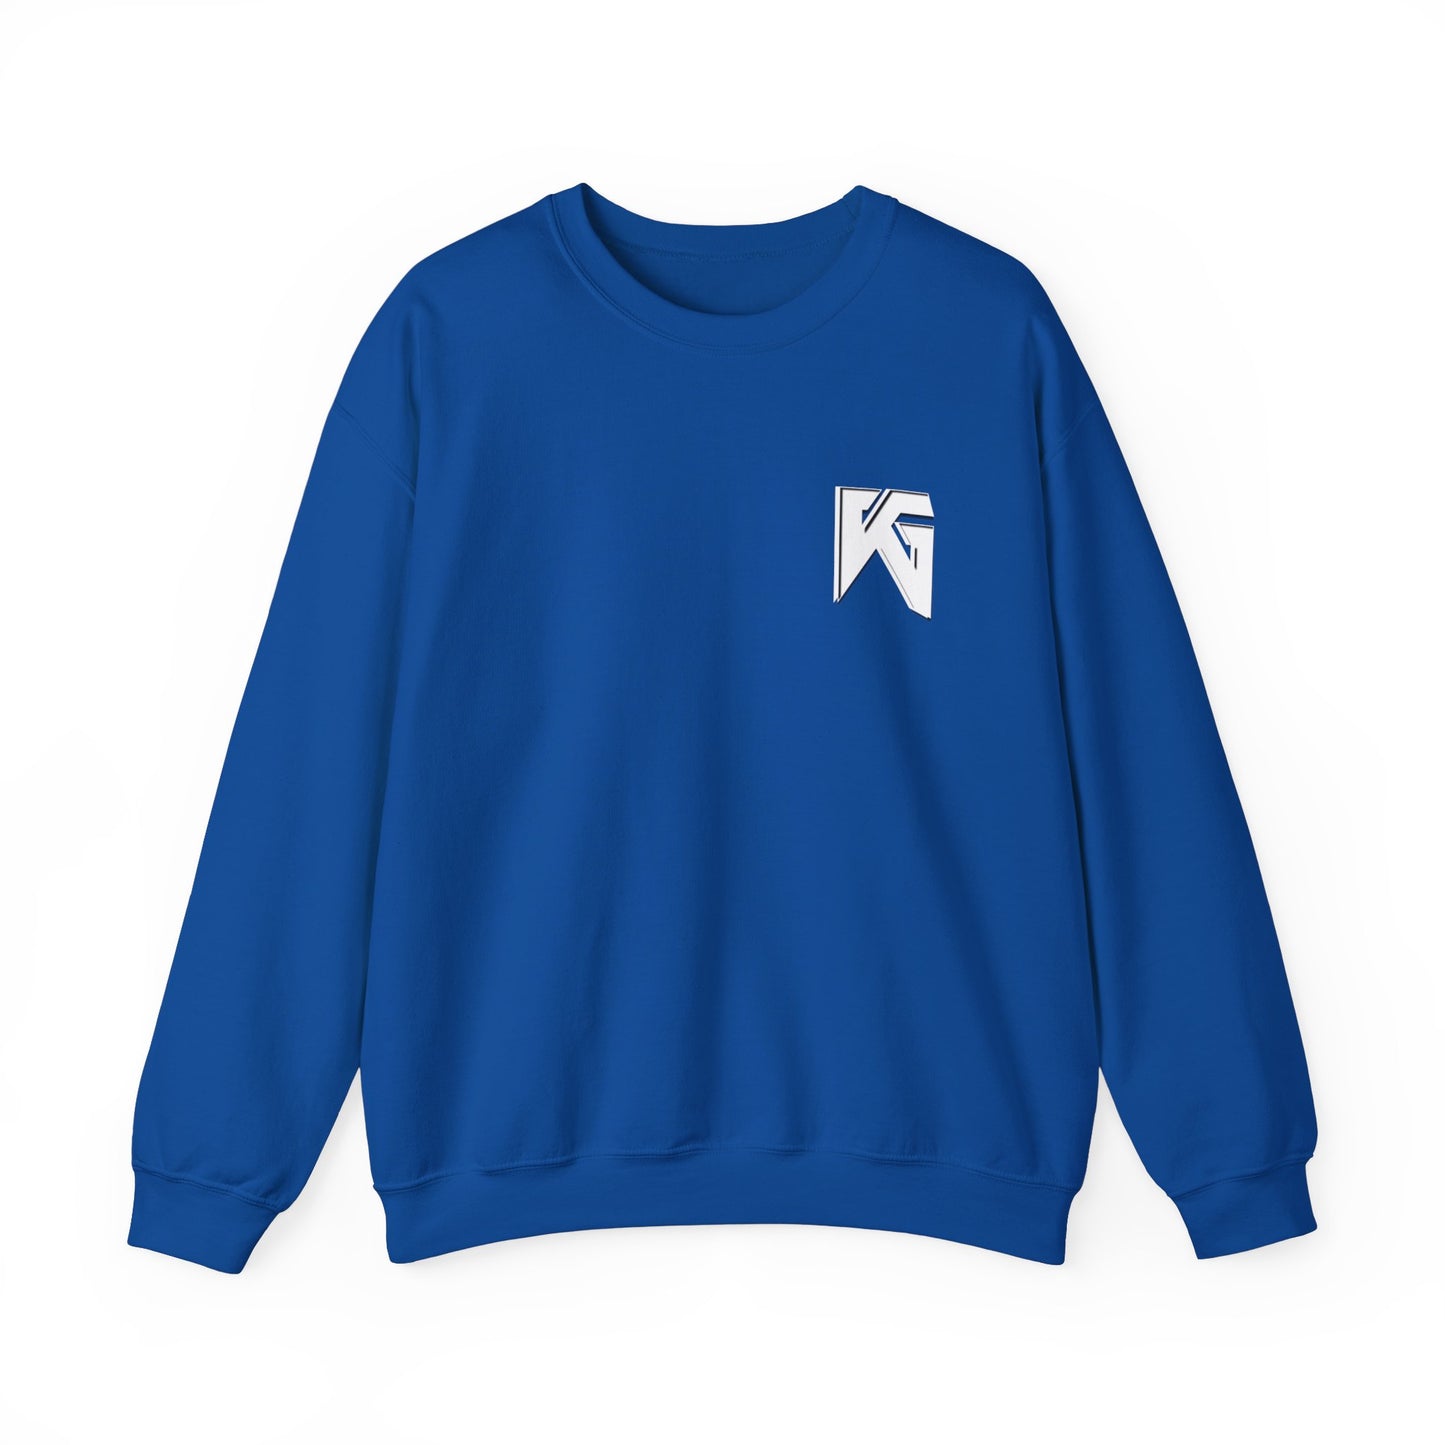 KG Crewneck Sweatshirt